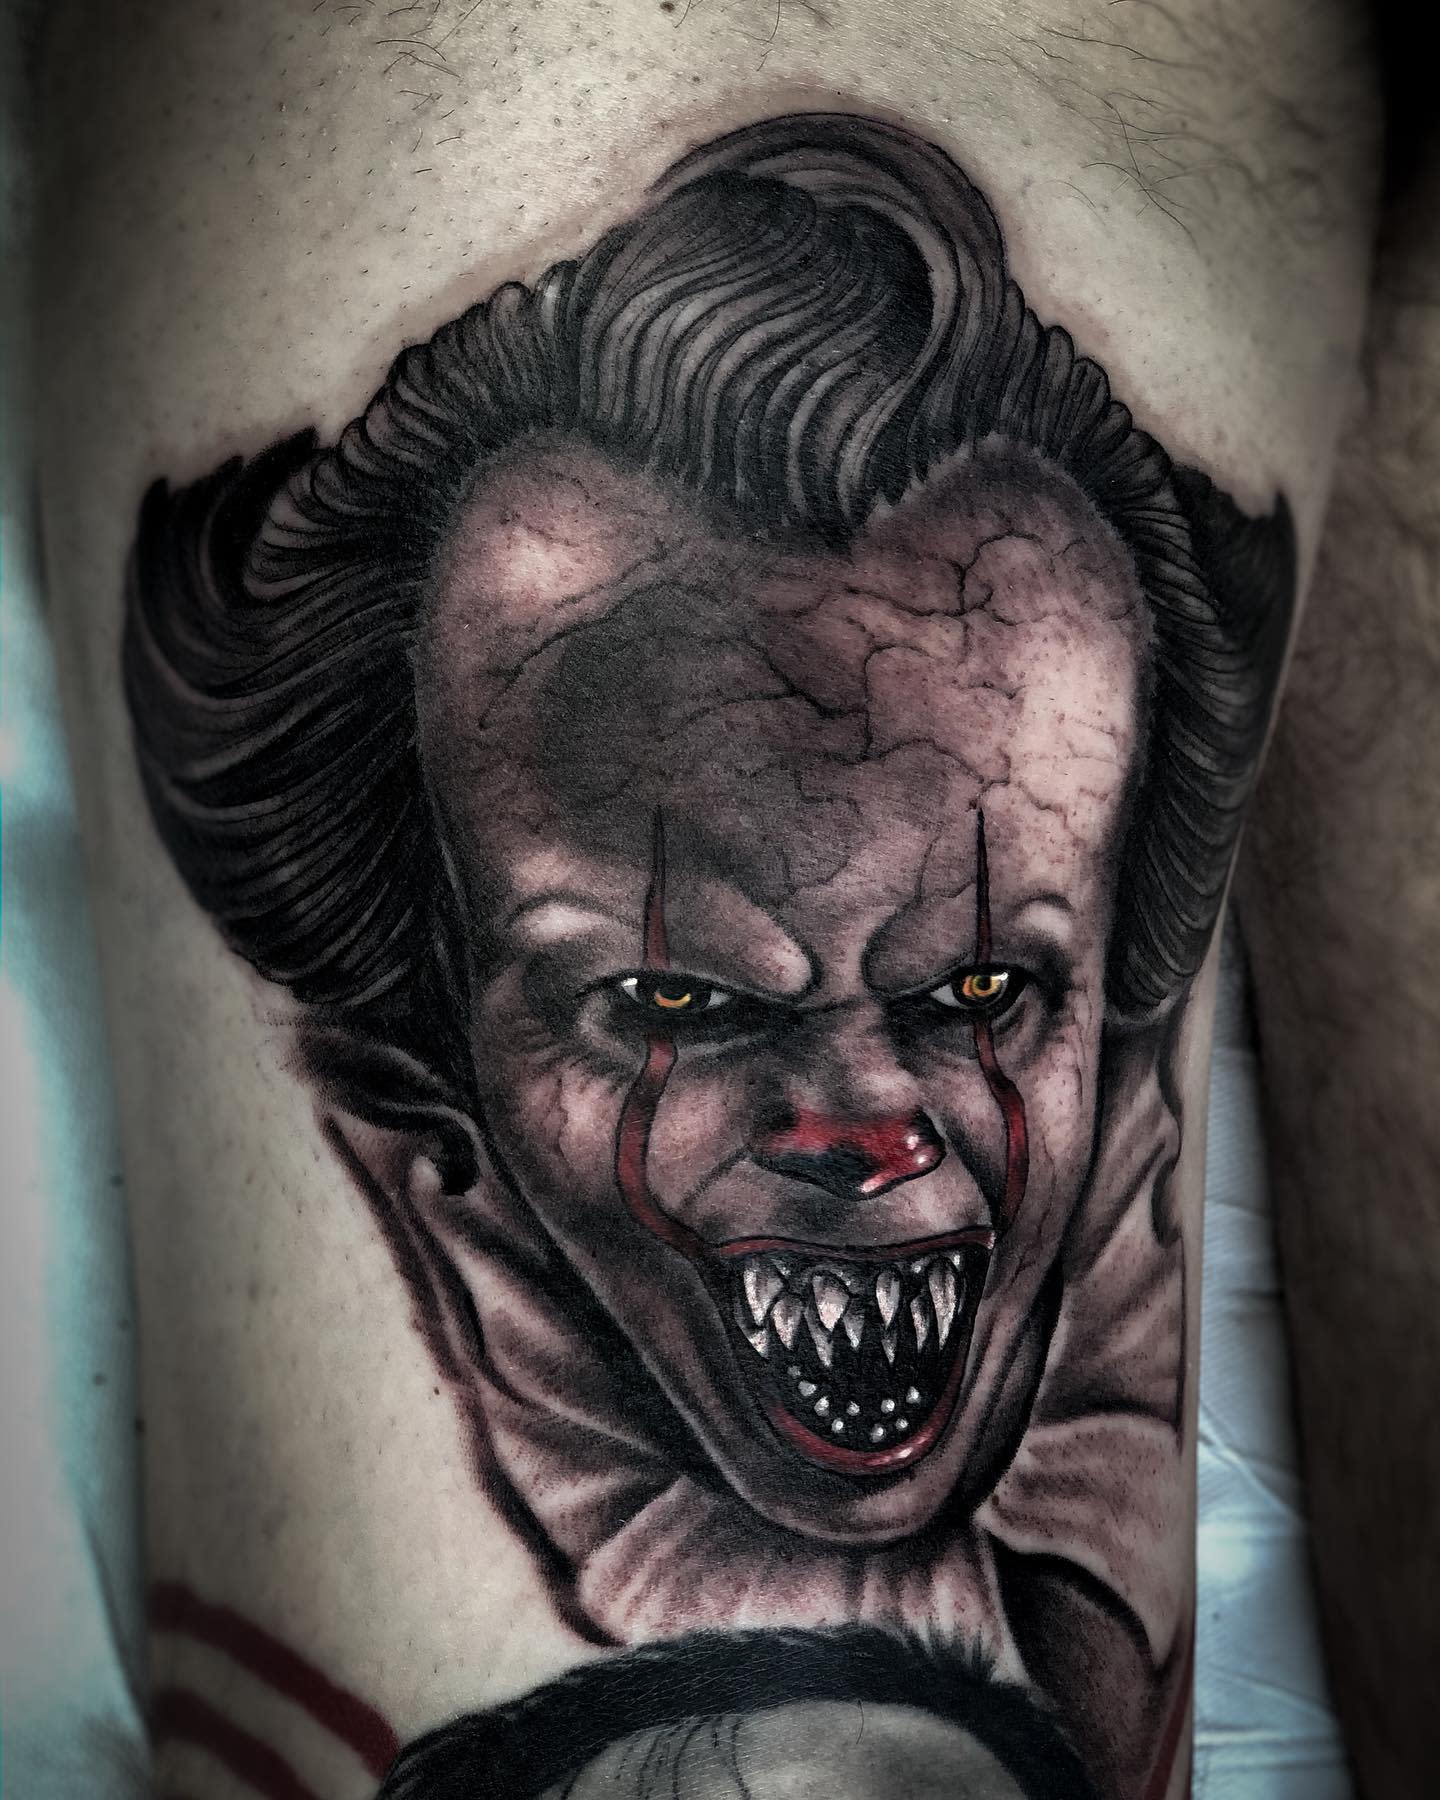 Pin by Lizia on черепа | Scary tattoos, Creepy tattoos, Skull sleeve tattoos